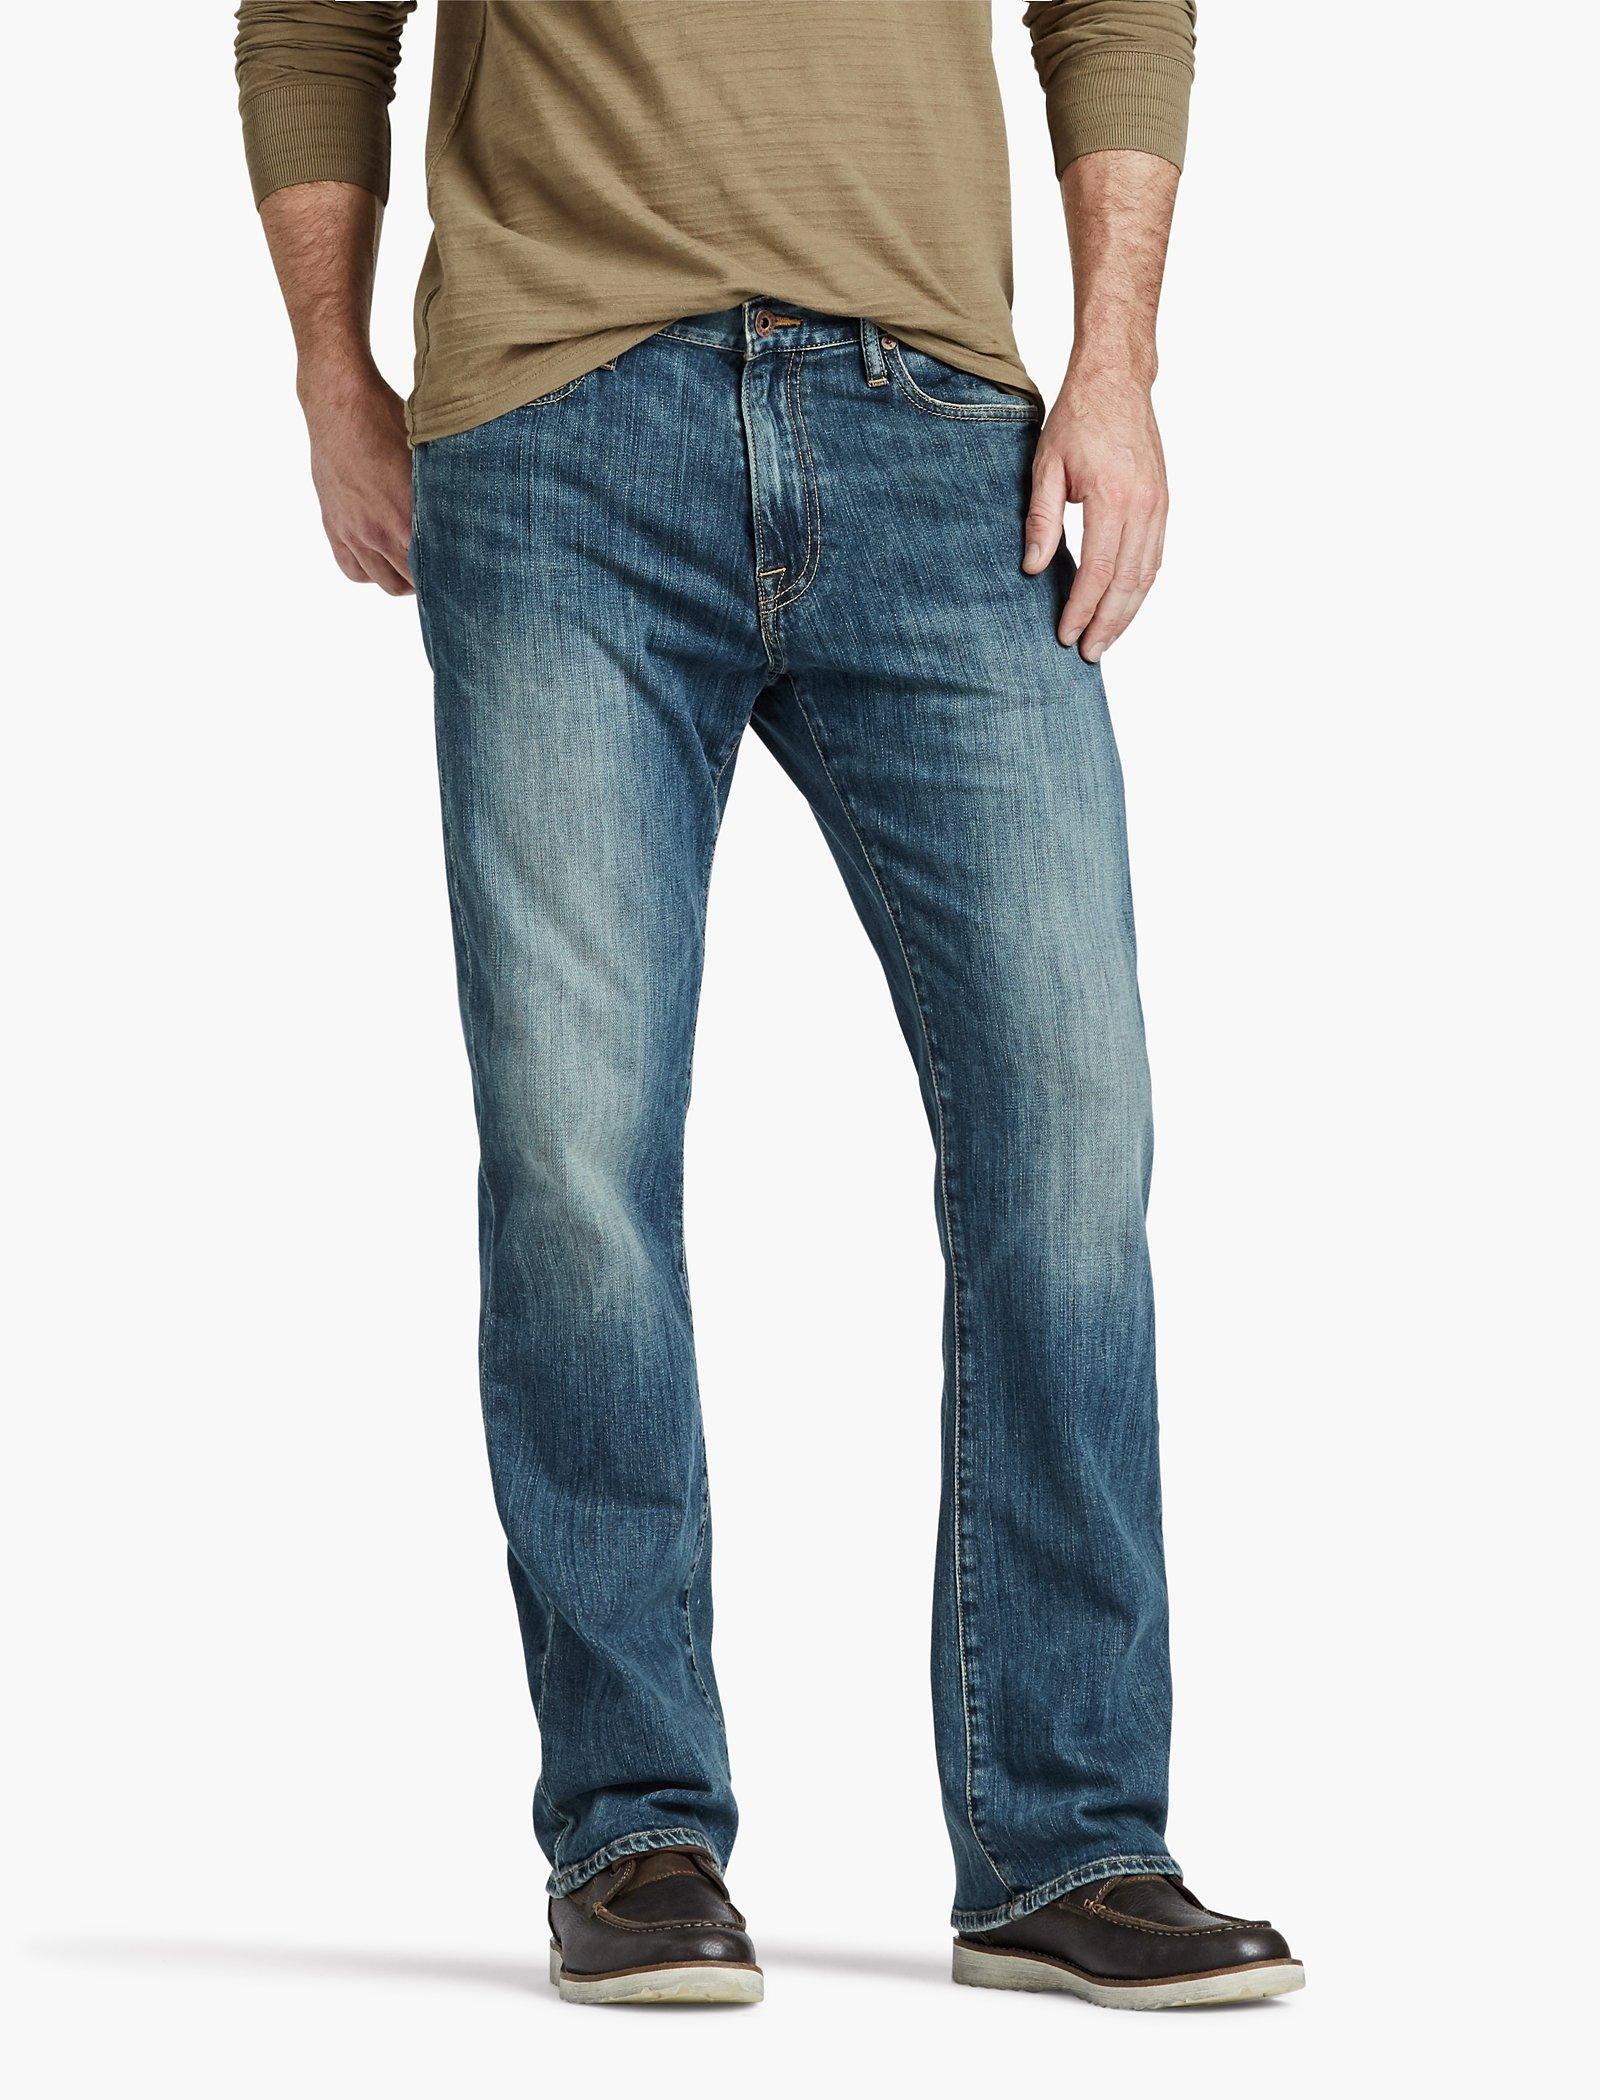 best custom jeans online